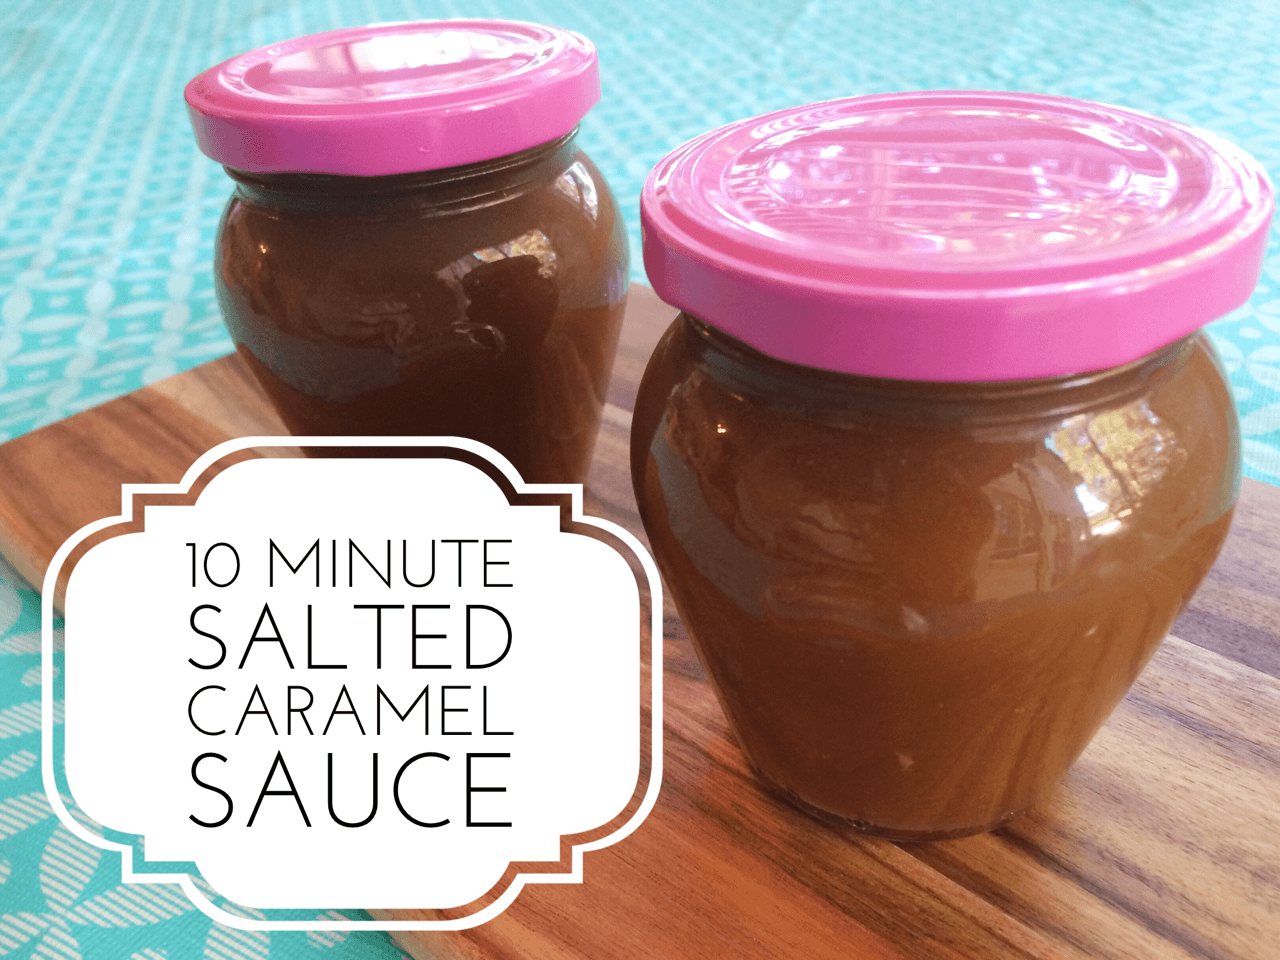 10 minute salted caramel sauce